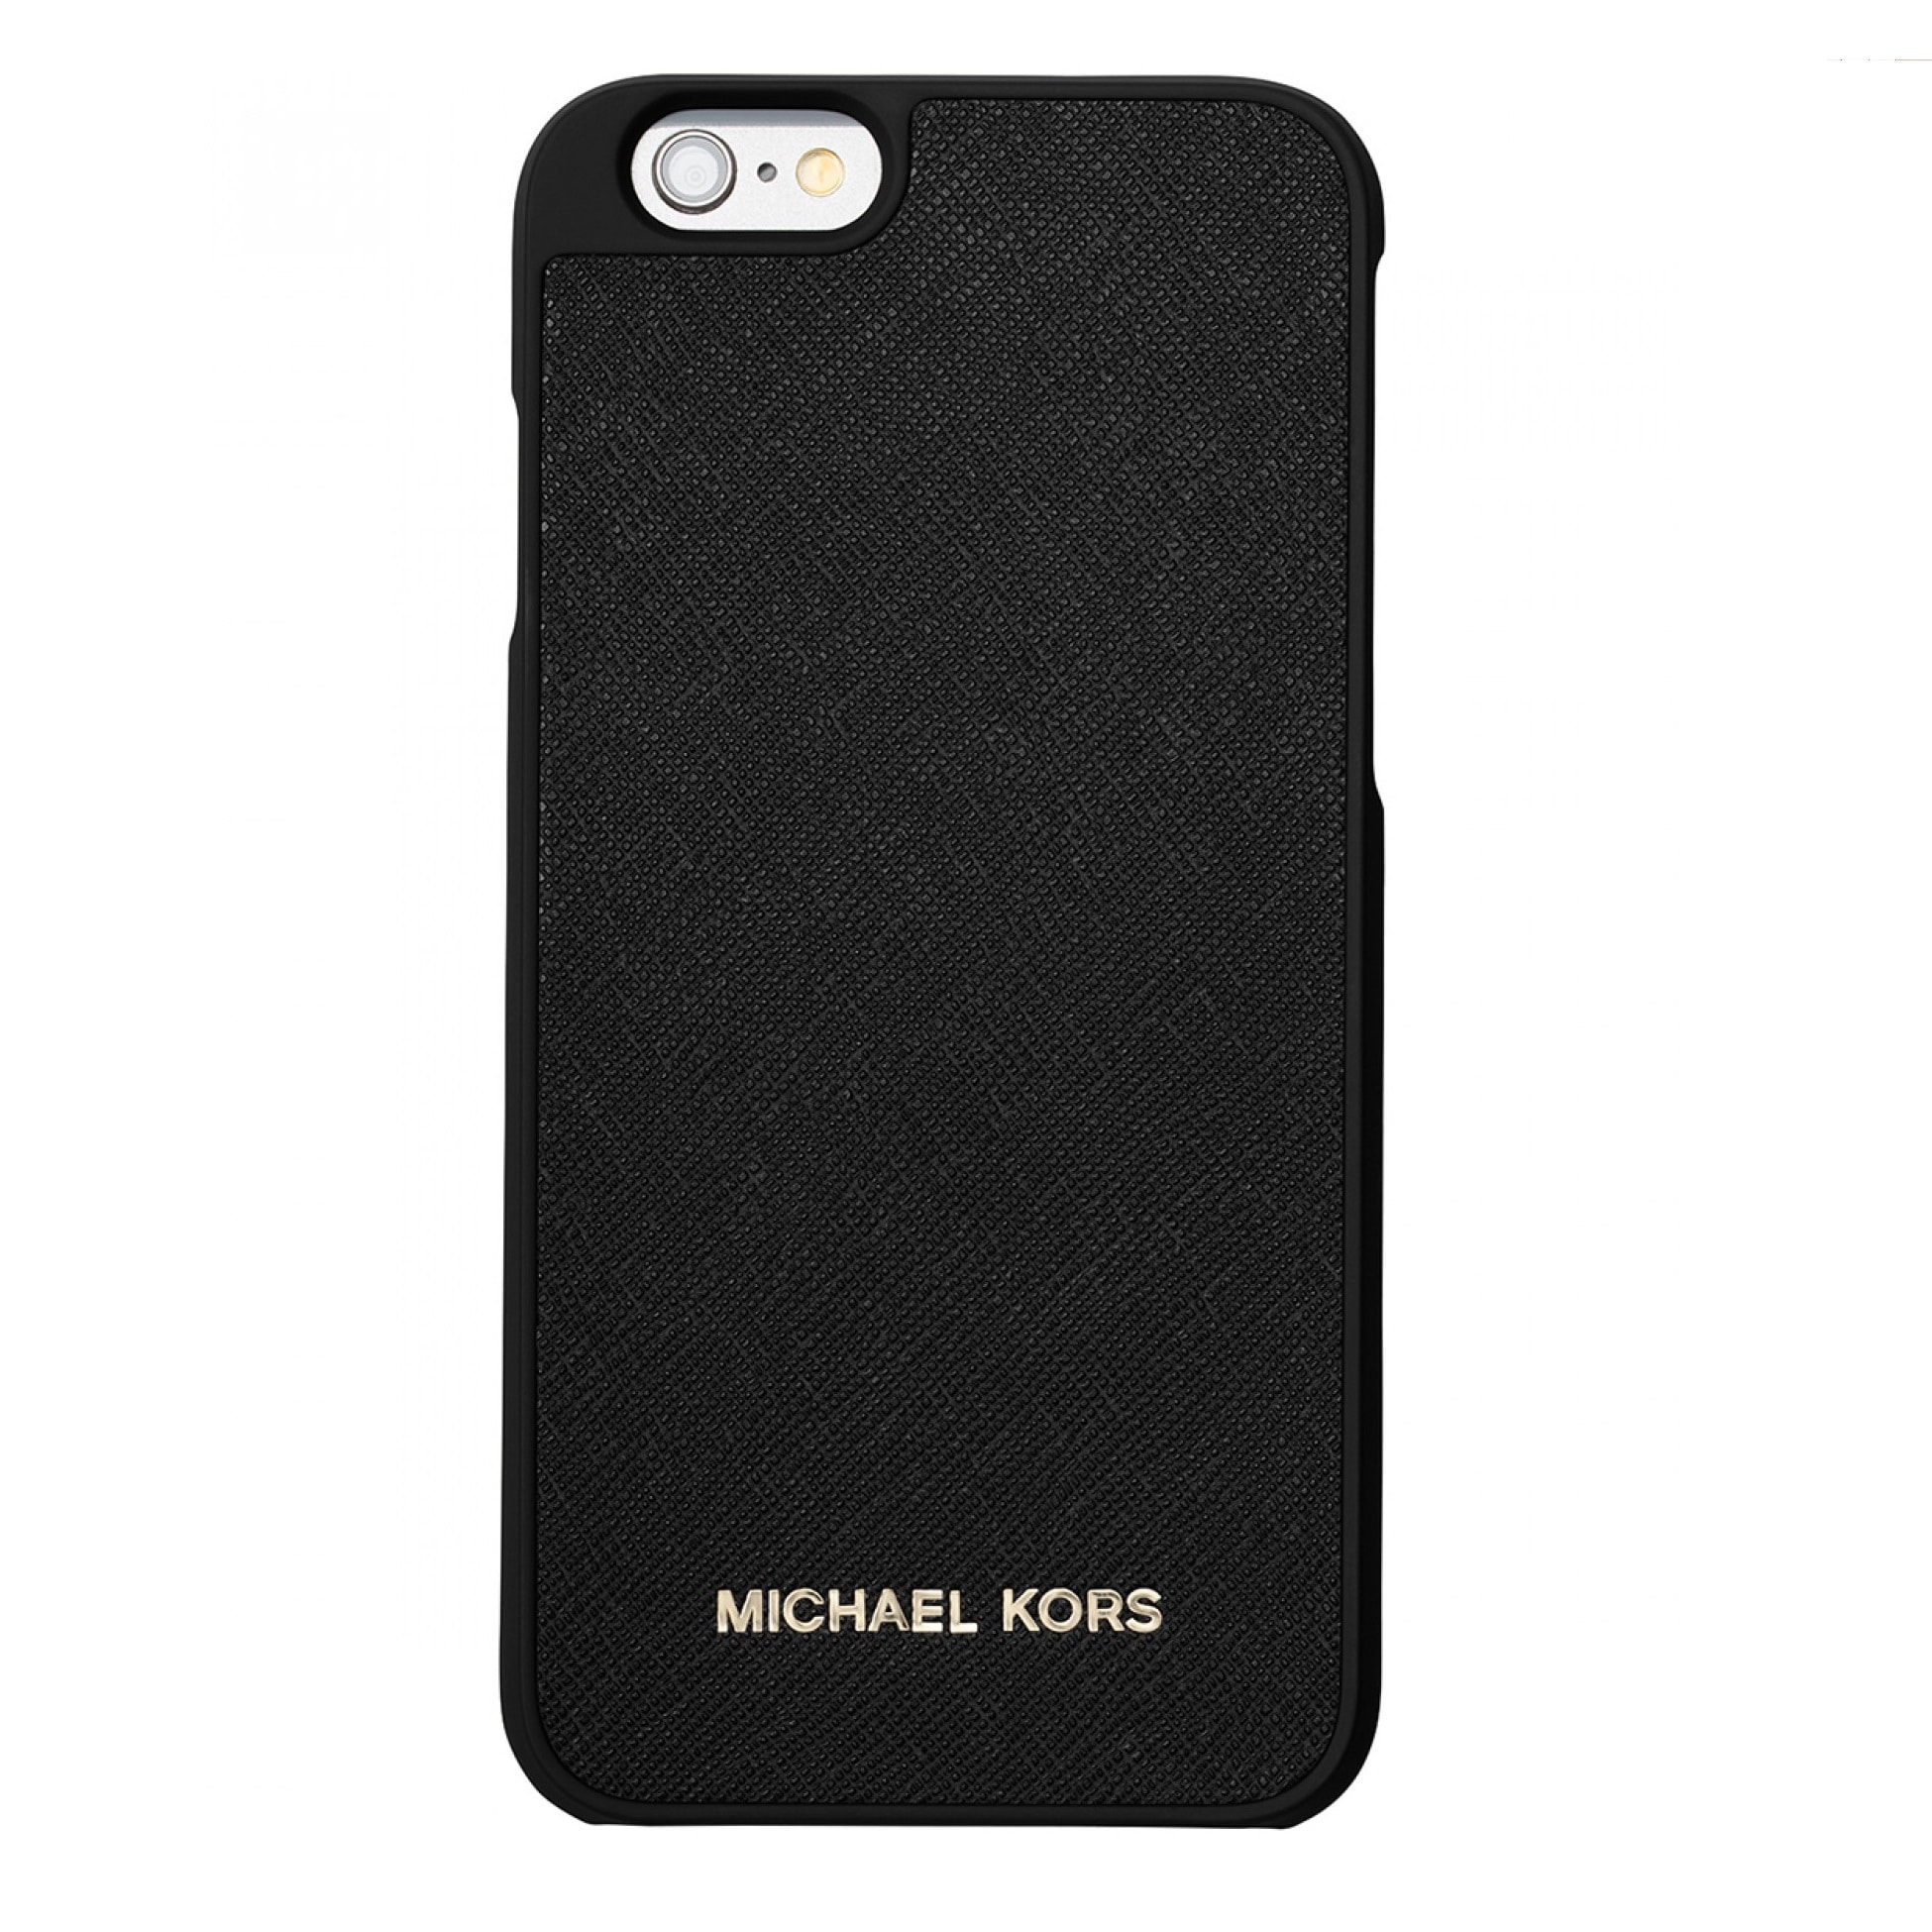 michaelkors phone case